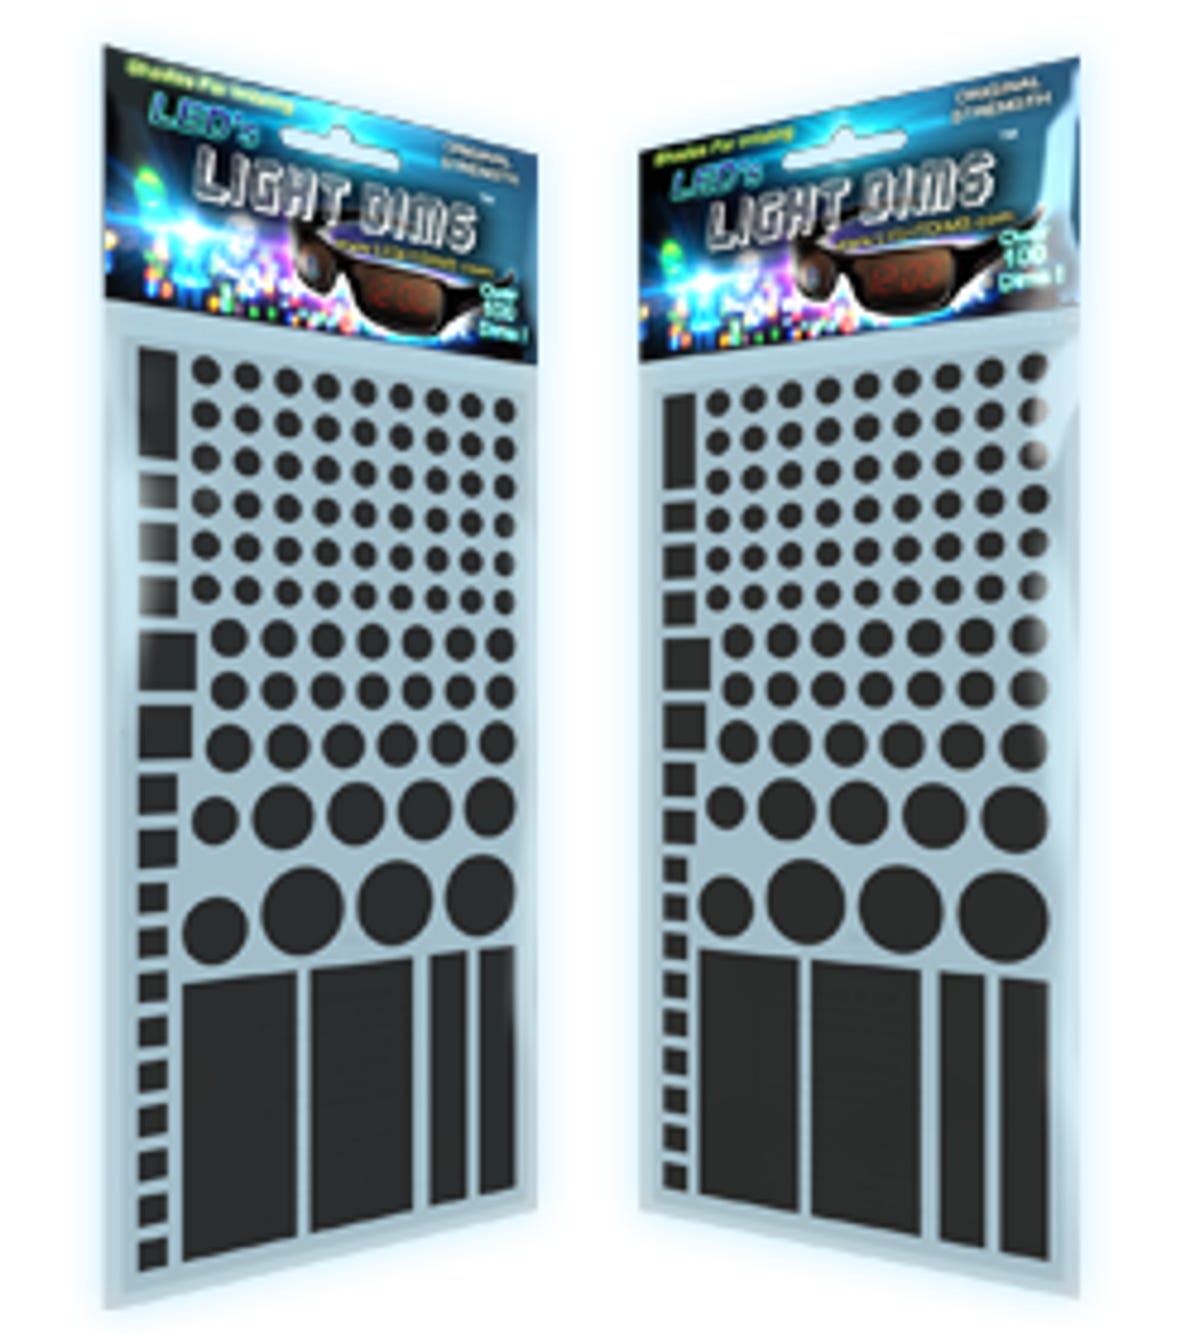 LightDims LED-blocking tabs.